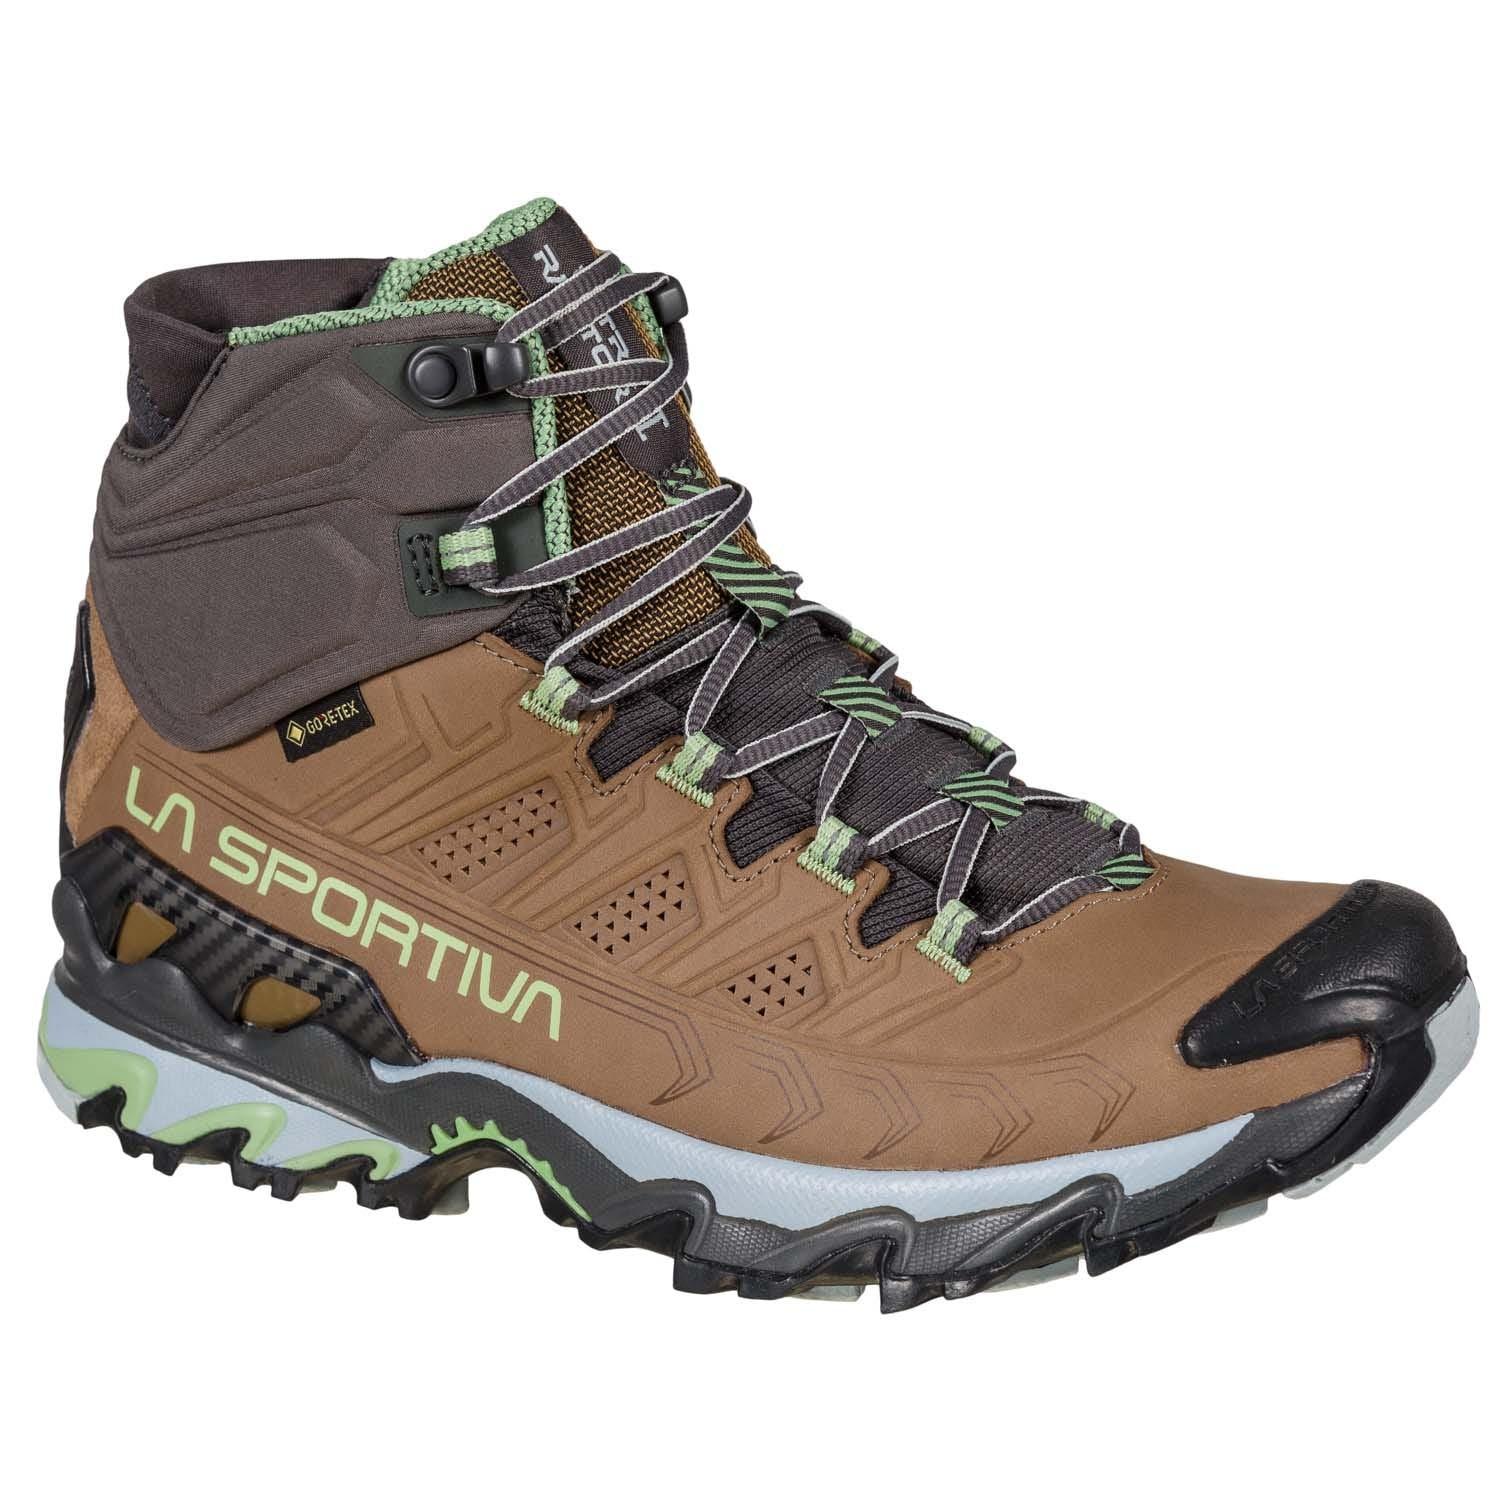 La Sportiva Ultra Raptor II Mid Hiking Boot (Women's) Taupe/Sage - Find Your Feet Australia Hobart Launceston Tasmania